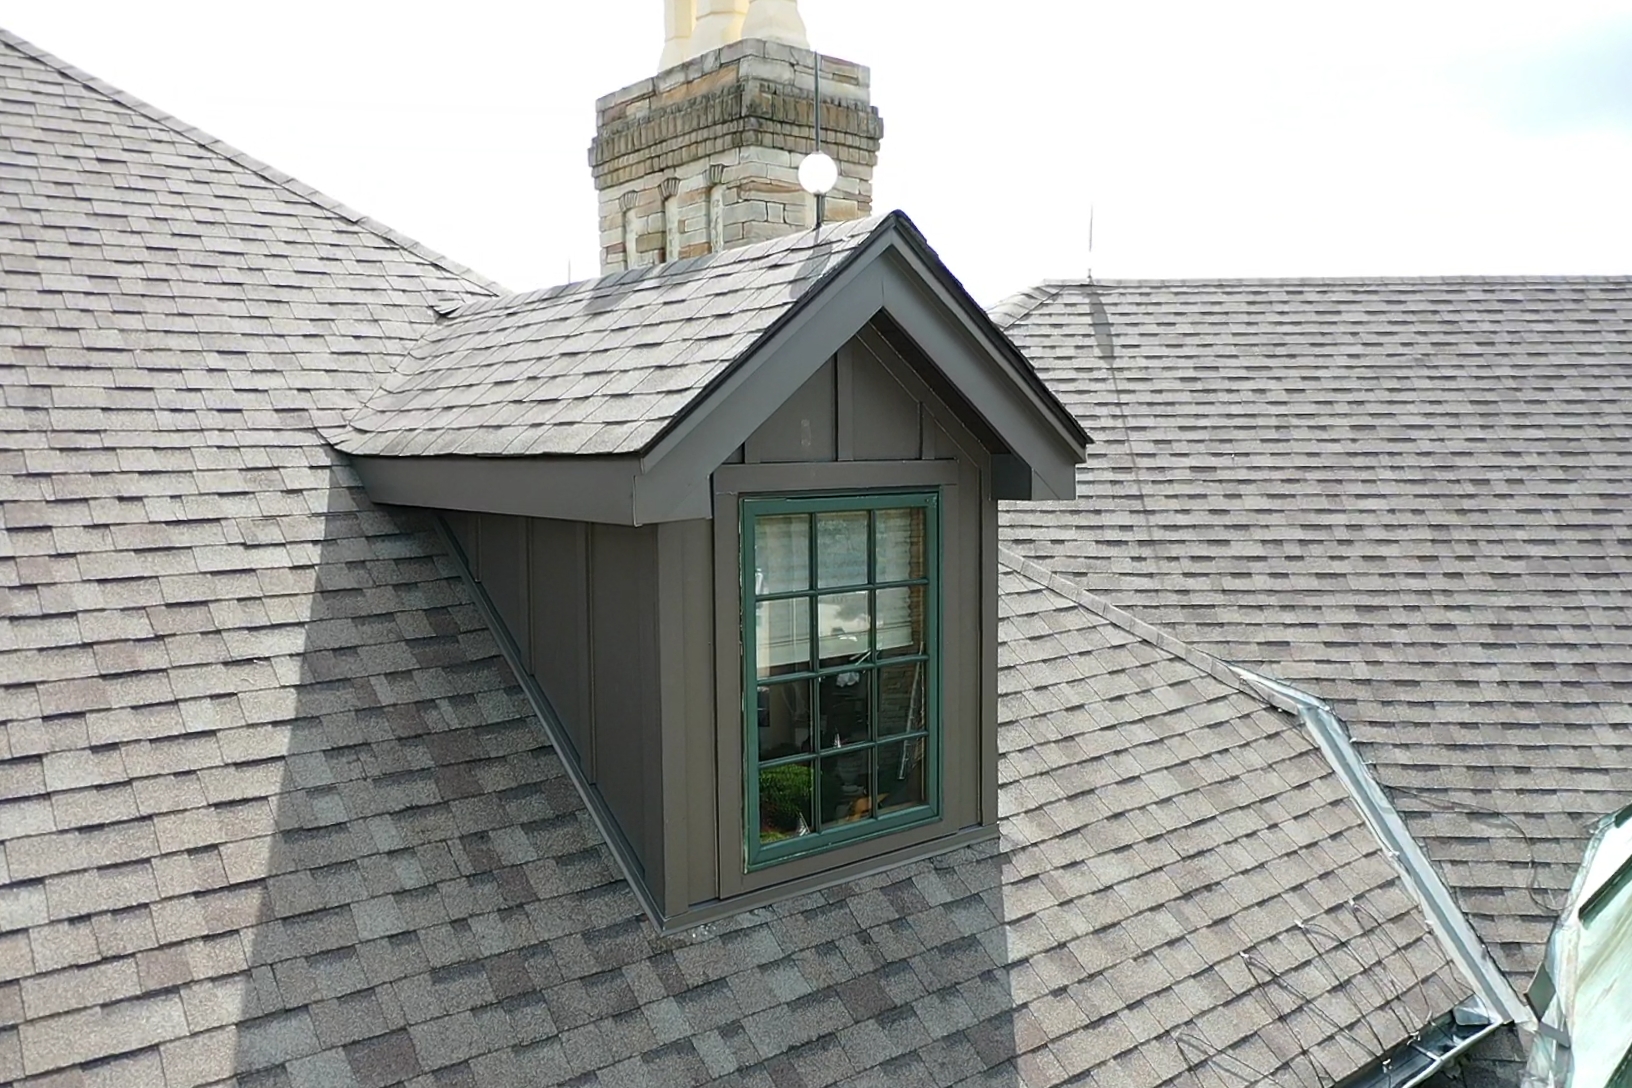 Slagle Roofing & Construction